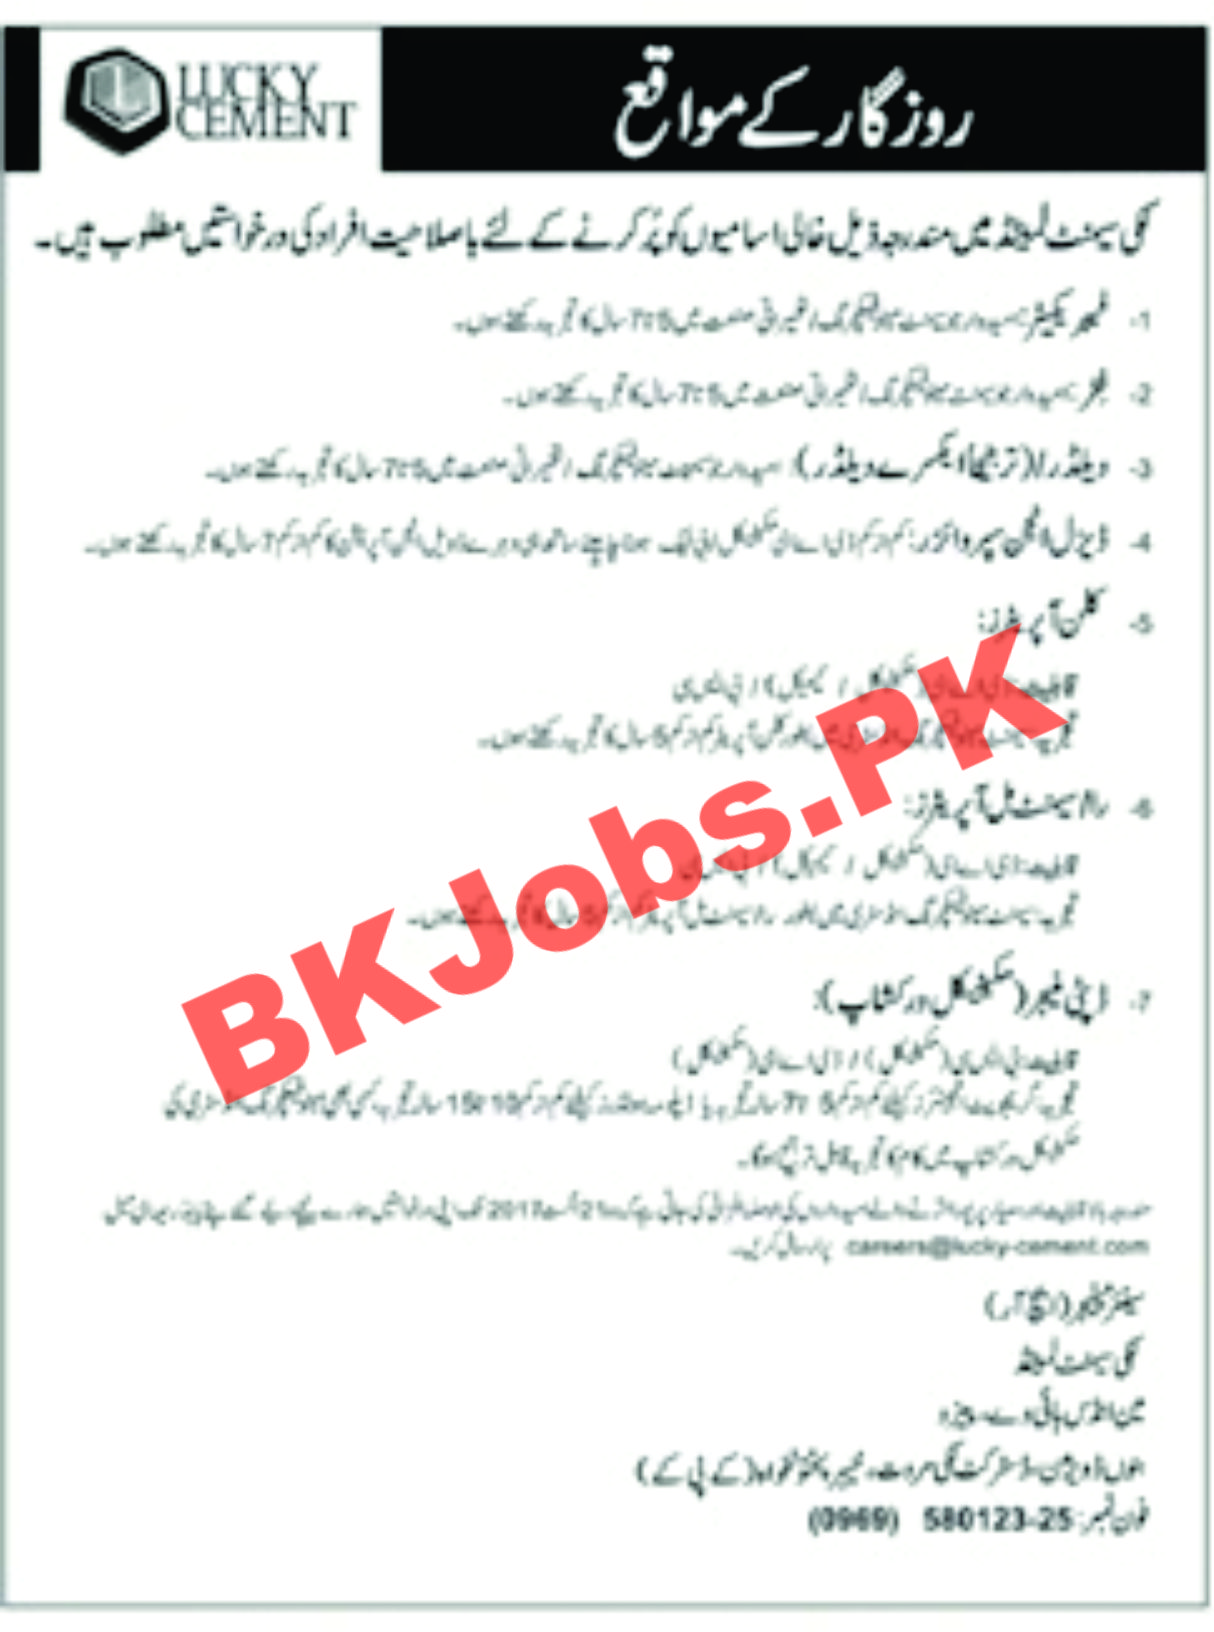 Lucky Cement Factory Limited Jobs Latest Advertisement | BK Jobs